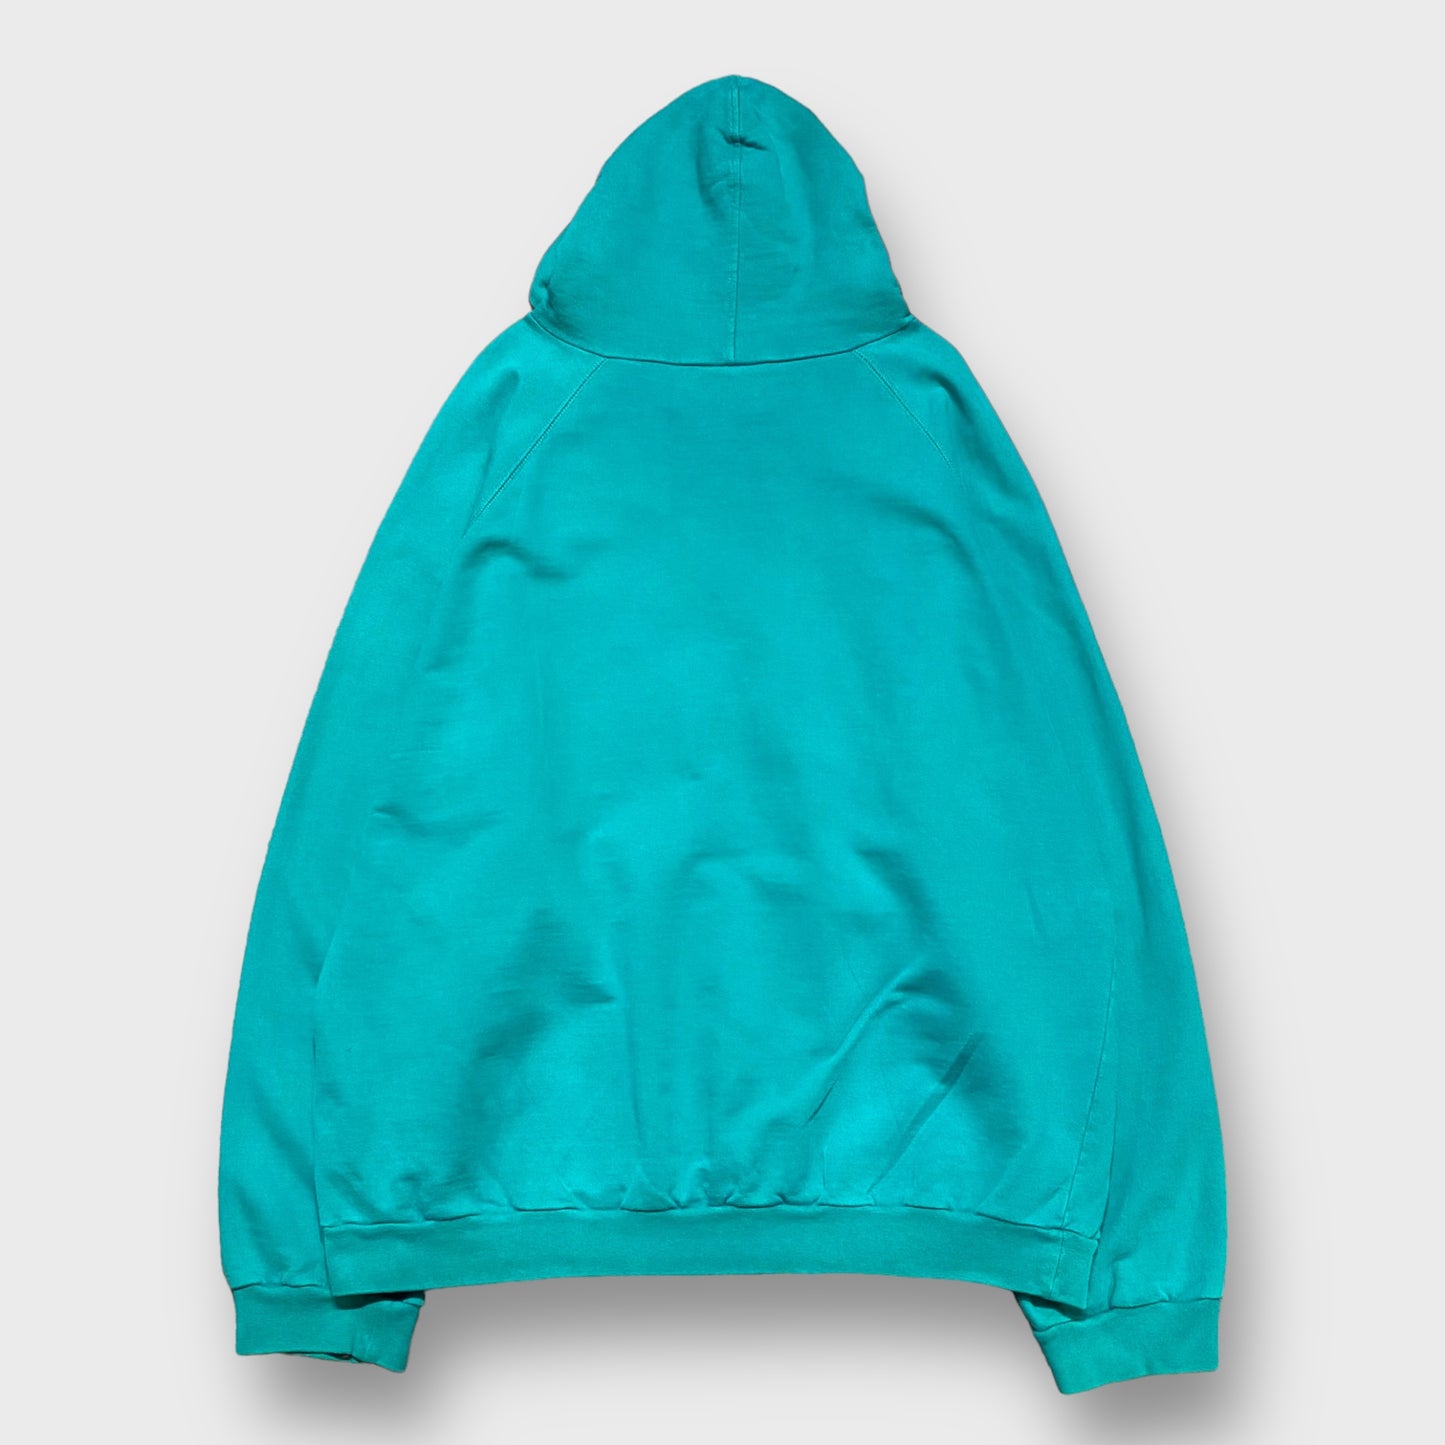 80's "adidas" Trefoil logo design hoodie